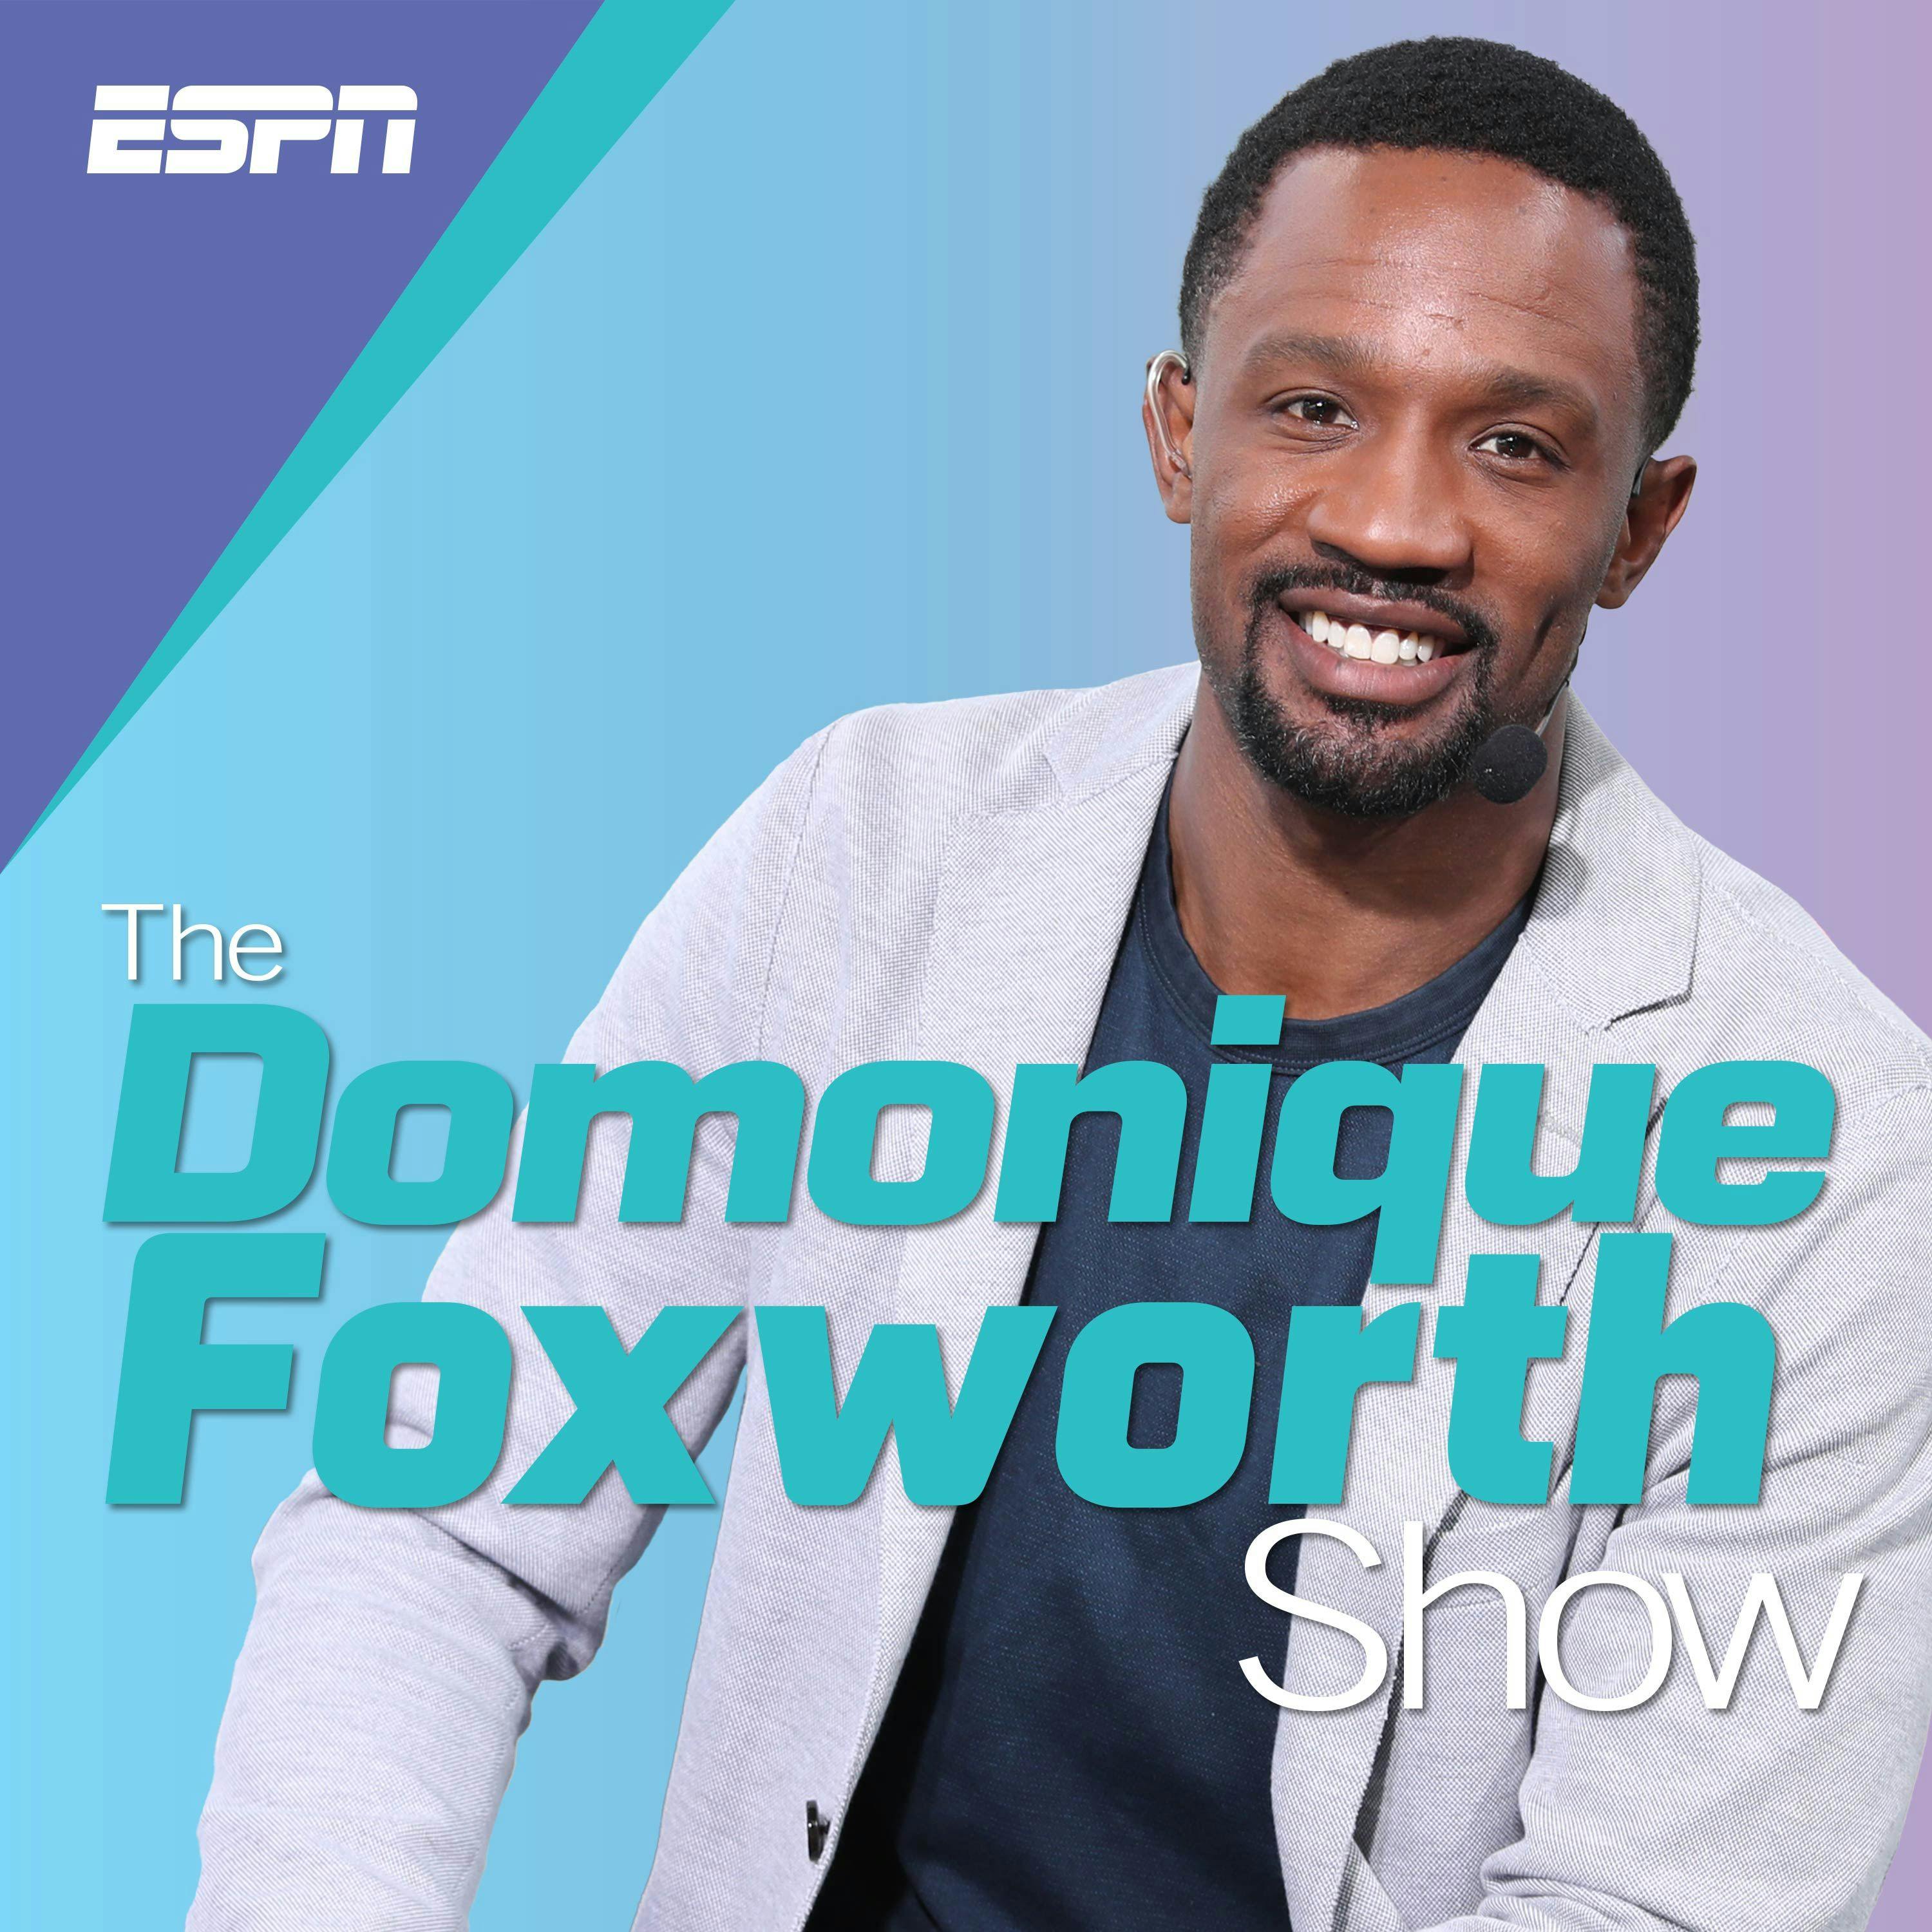 The Domonique Foxworth Show podcast show image